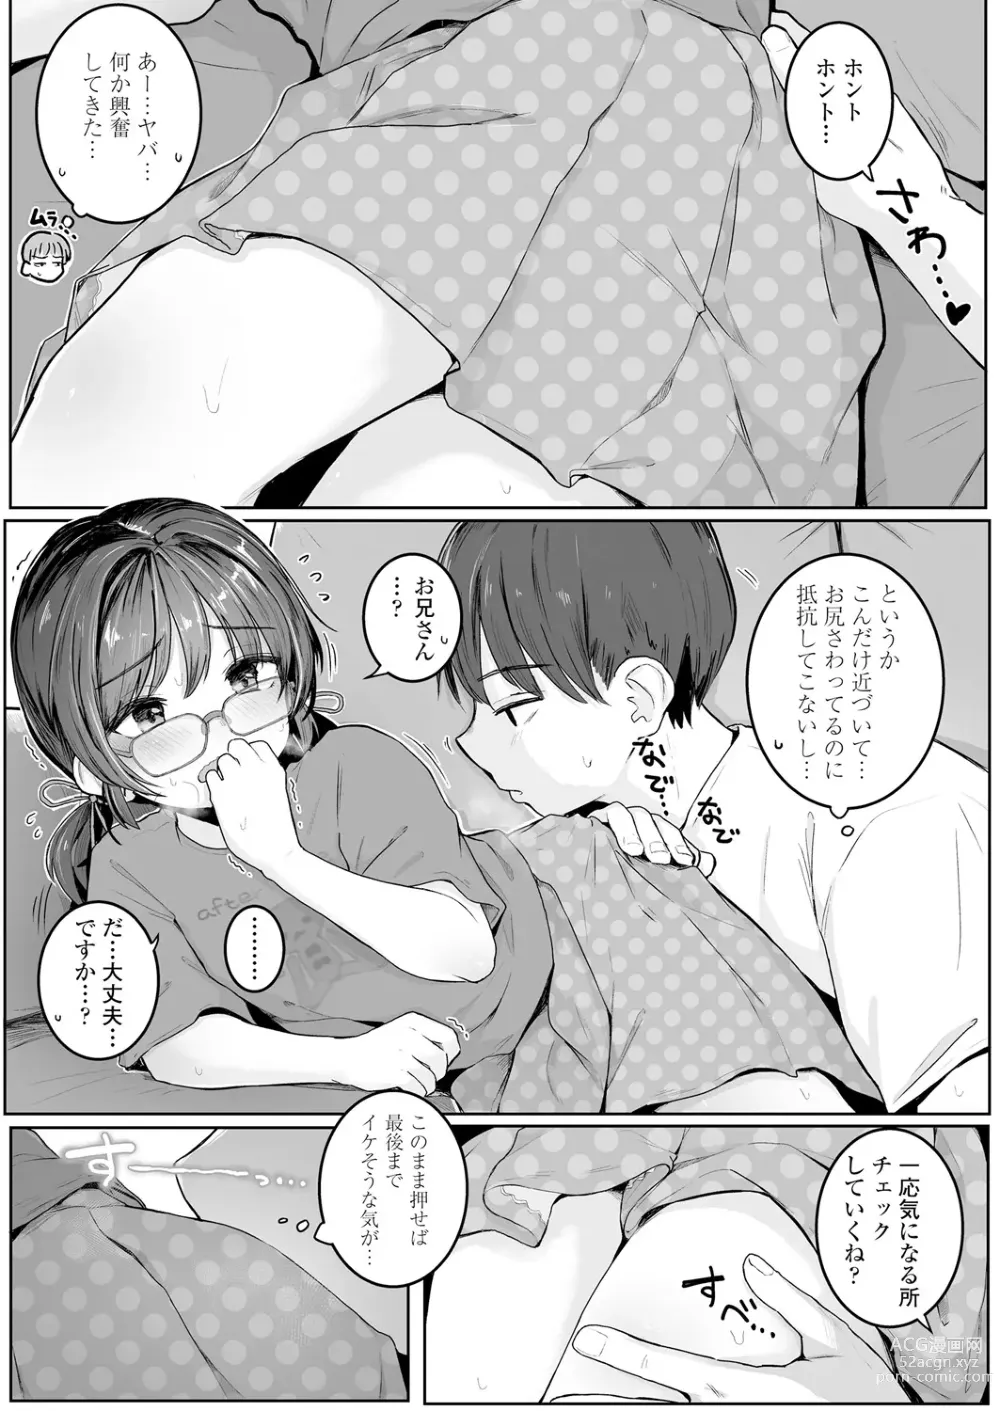 Page 7 of manga めぐみちゃんの気になるコト